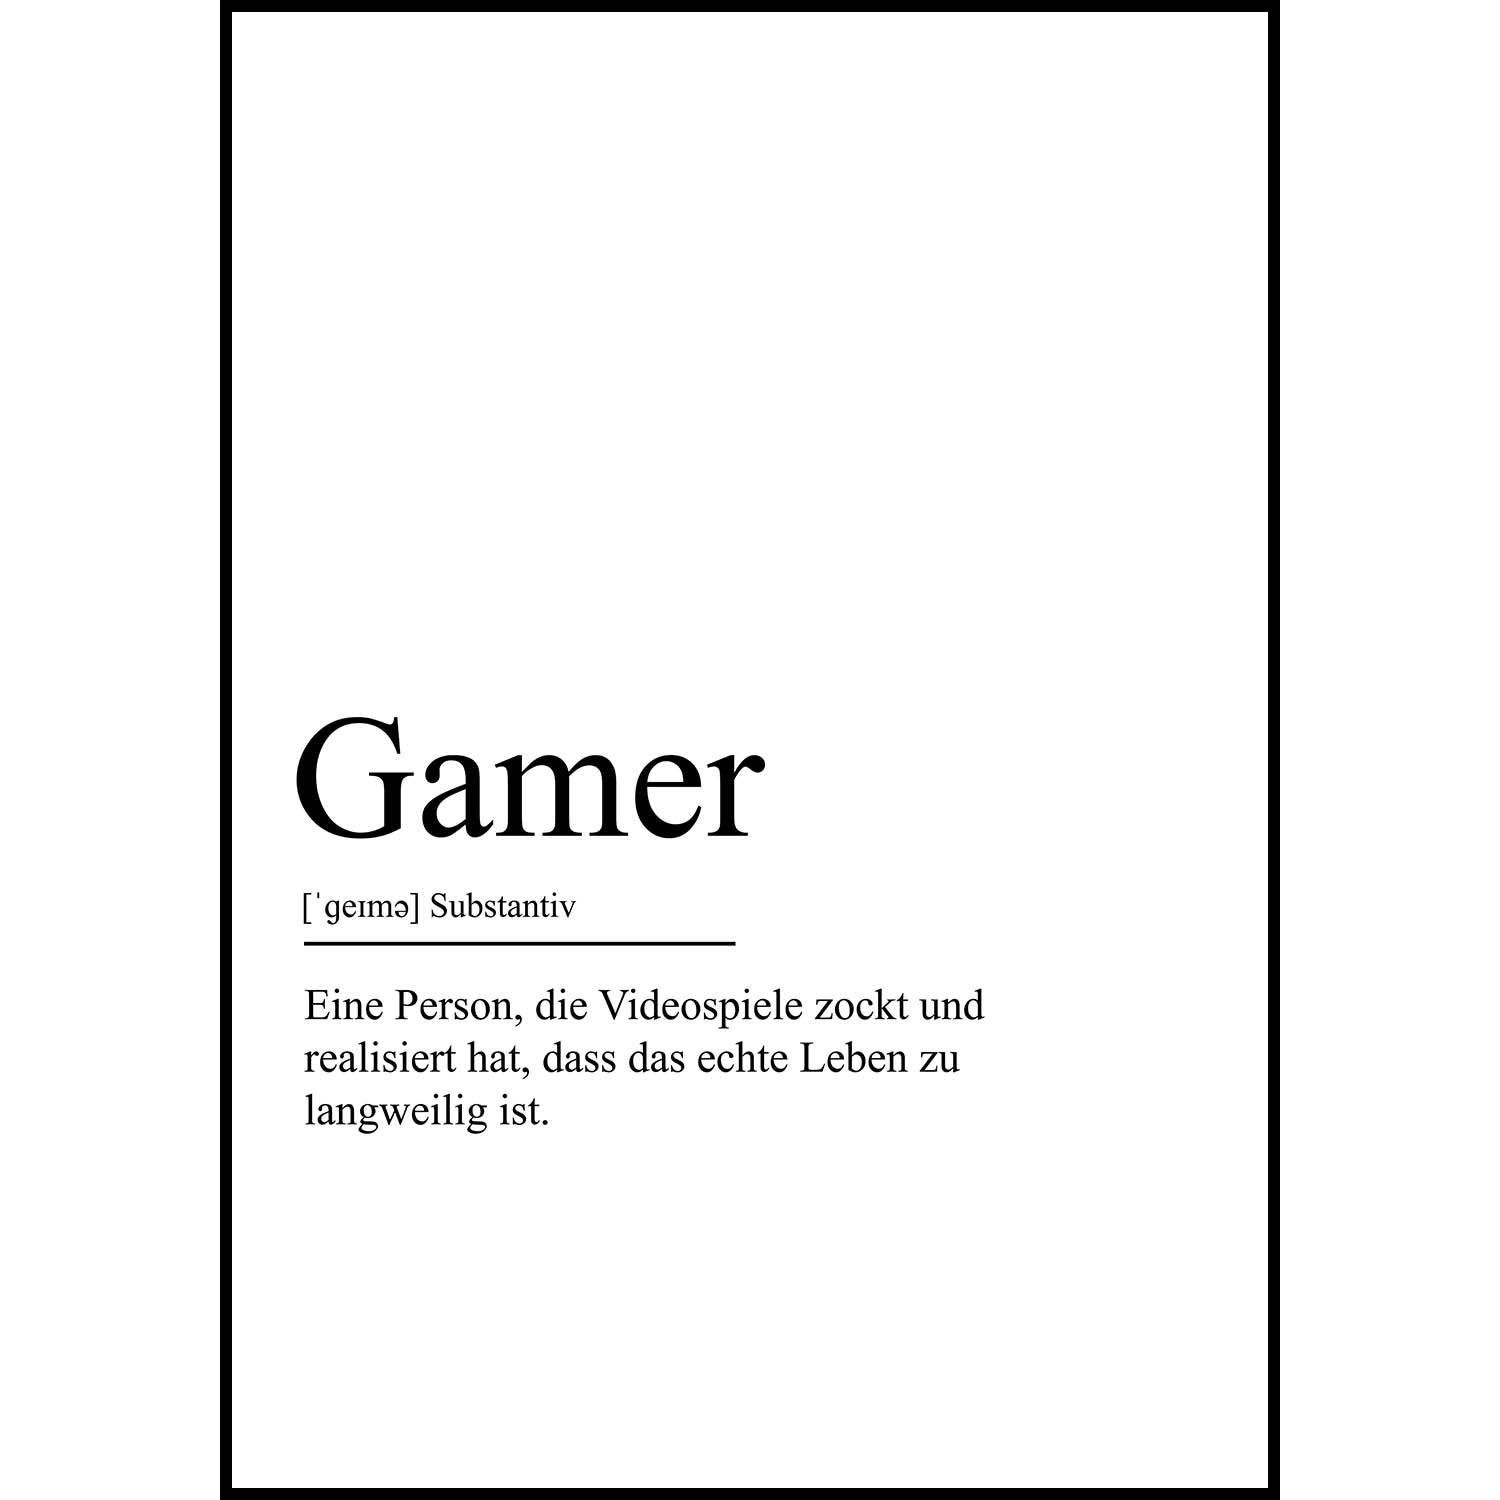 Gamer Definition